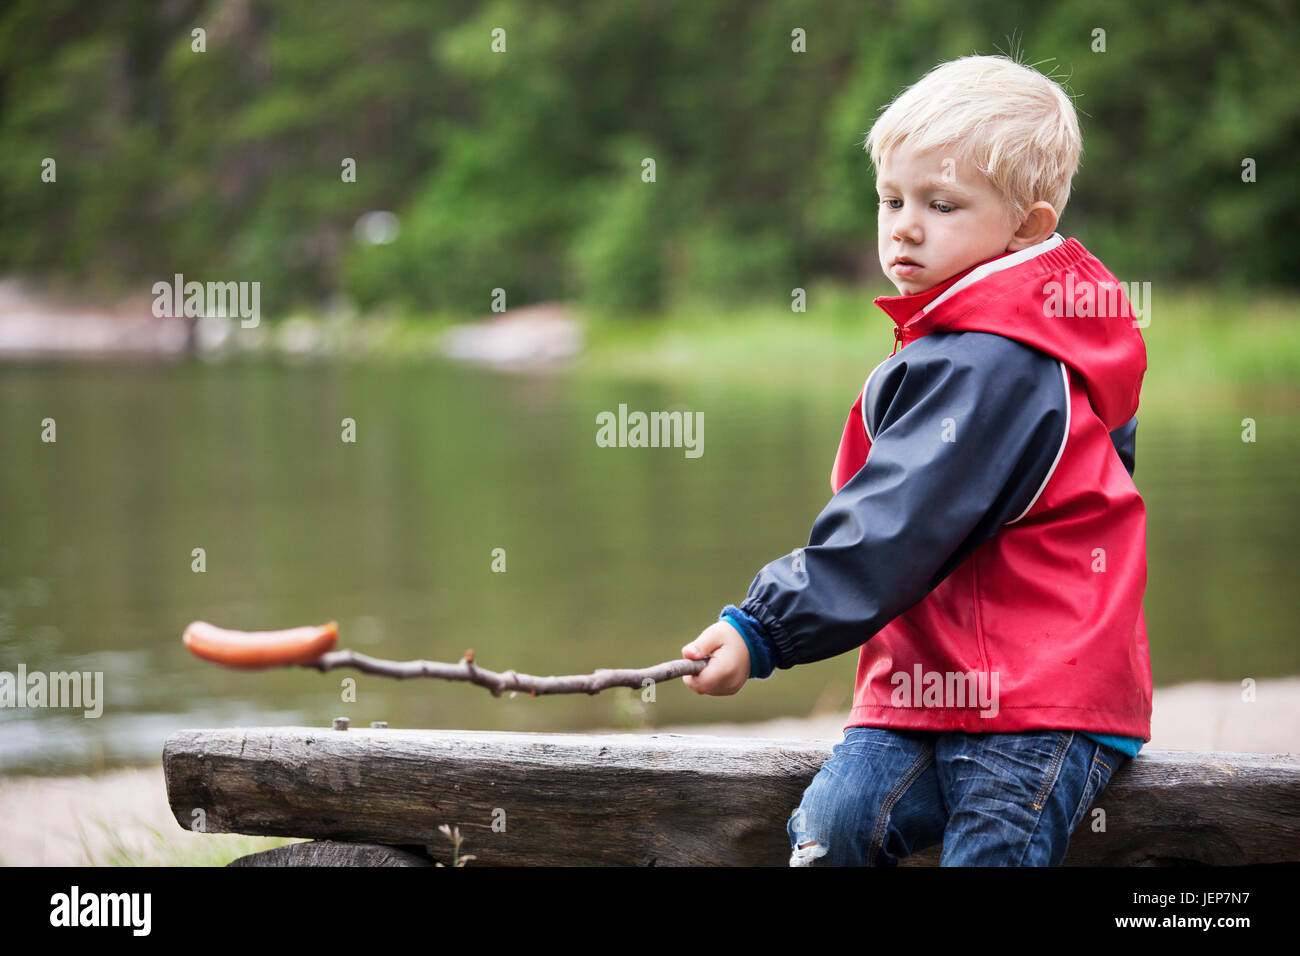 Boy with sausage on stick Stock Photo